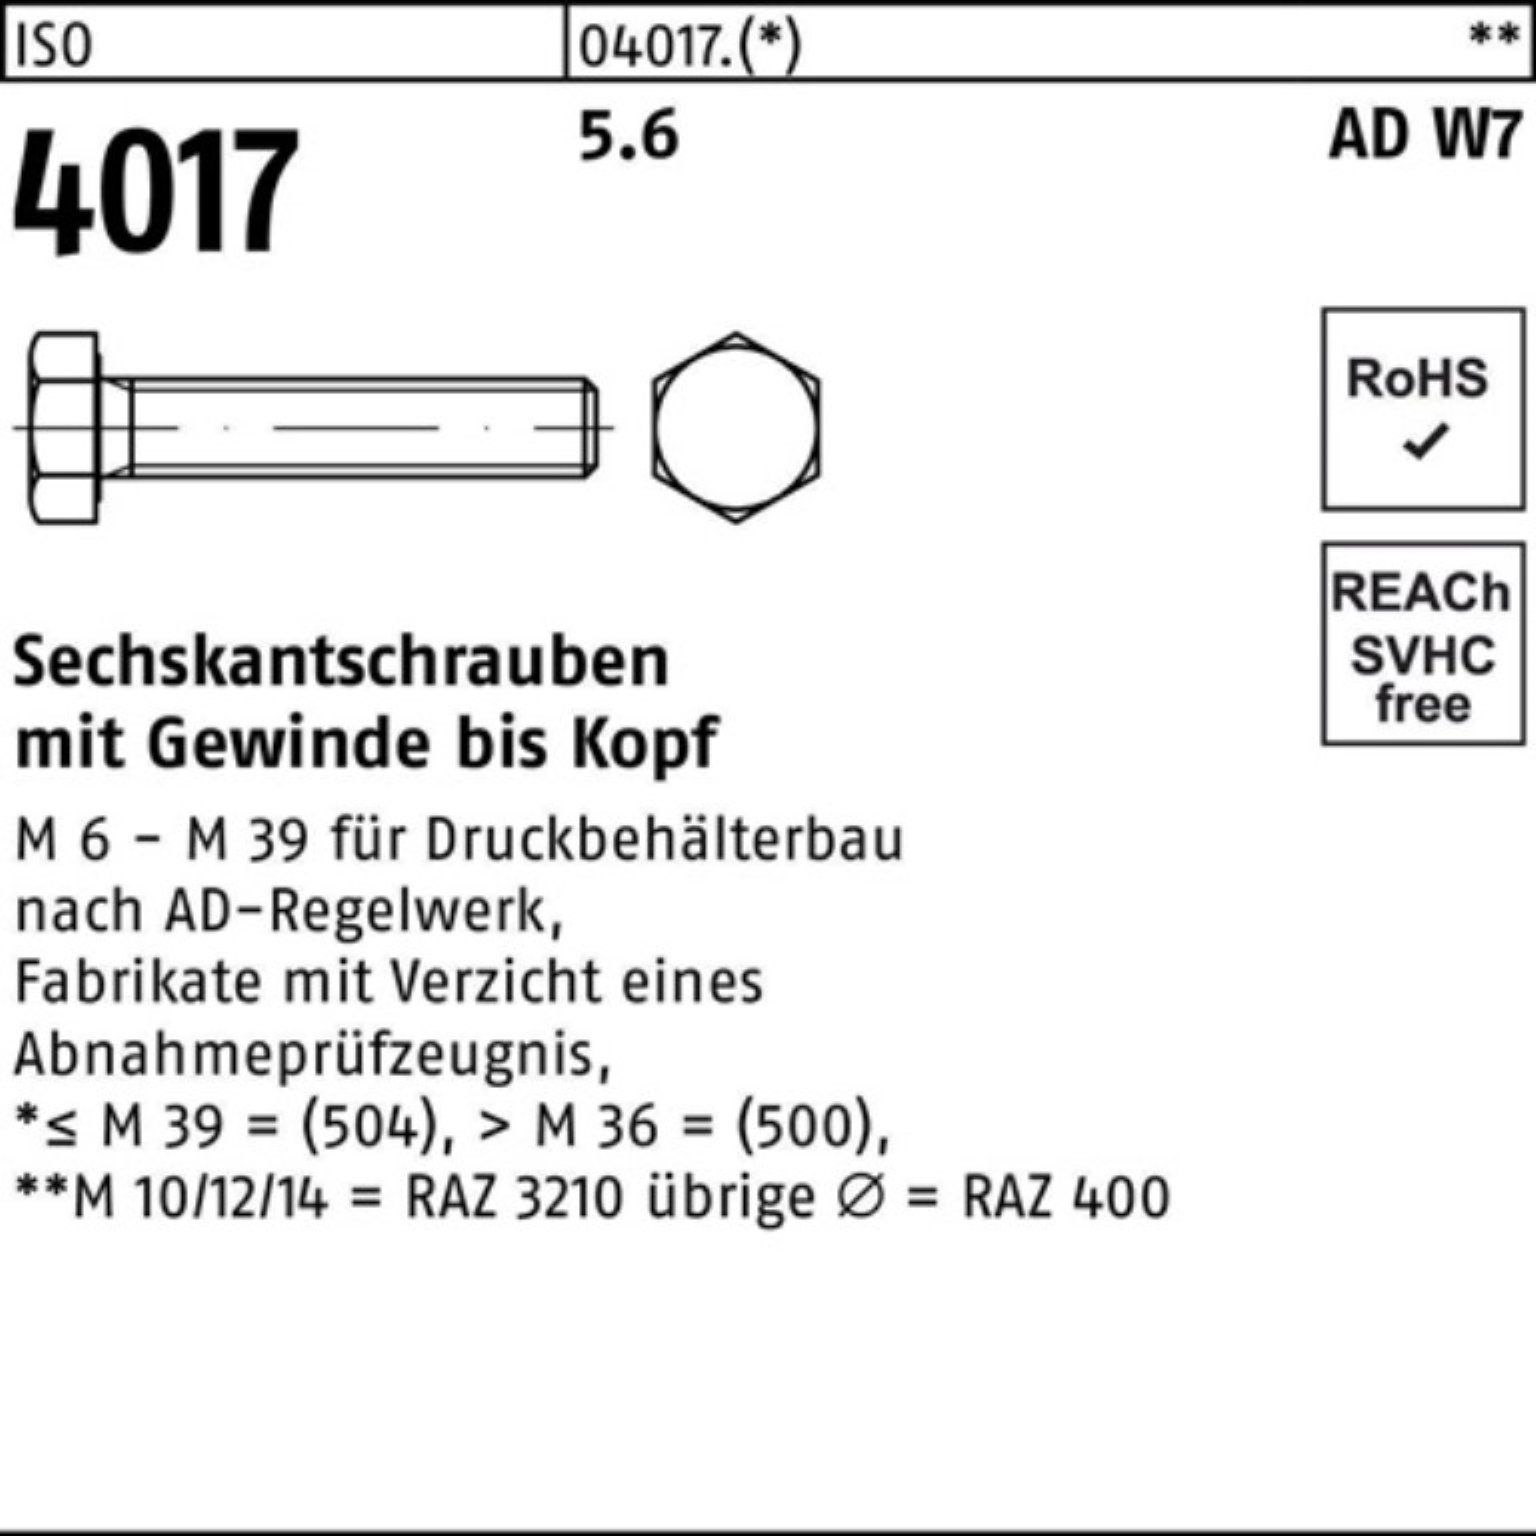 Bufab Sechskantschraube 100er Pack Sechskantschraube ISO 4017 VG M12x 90 5.6 AD W7 50 Stück I